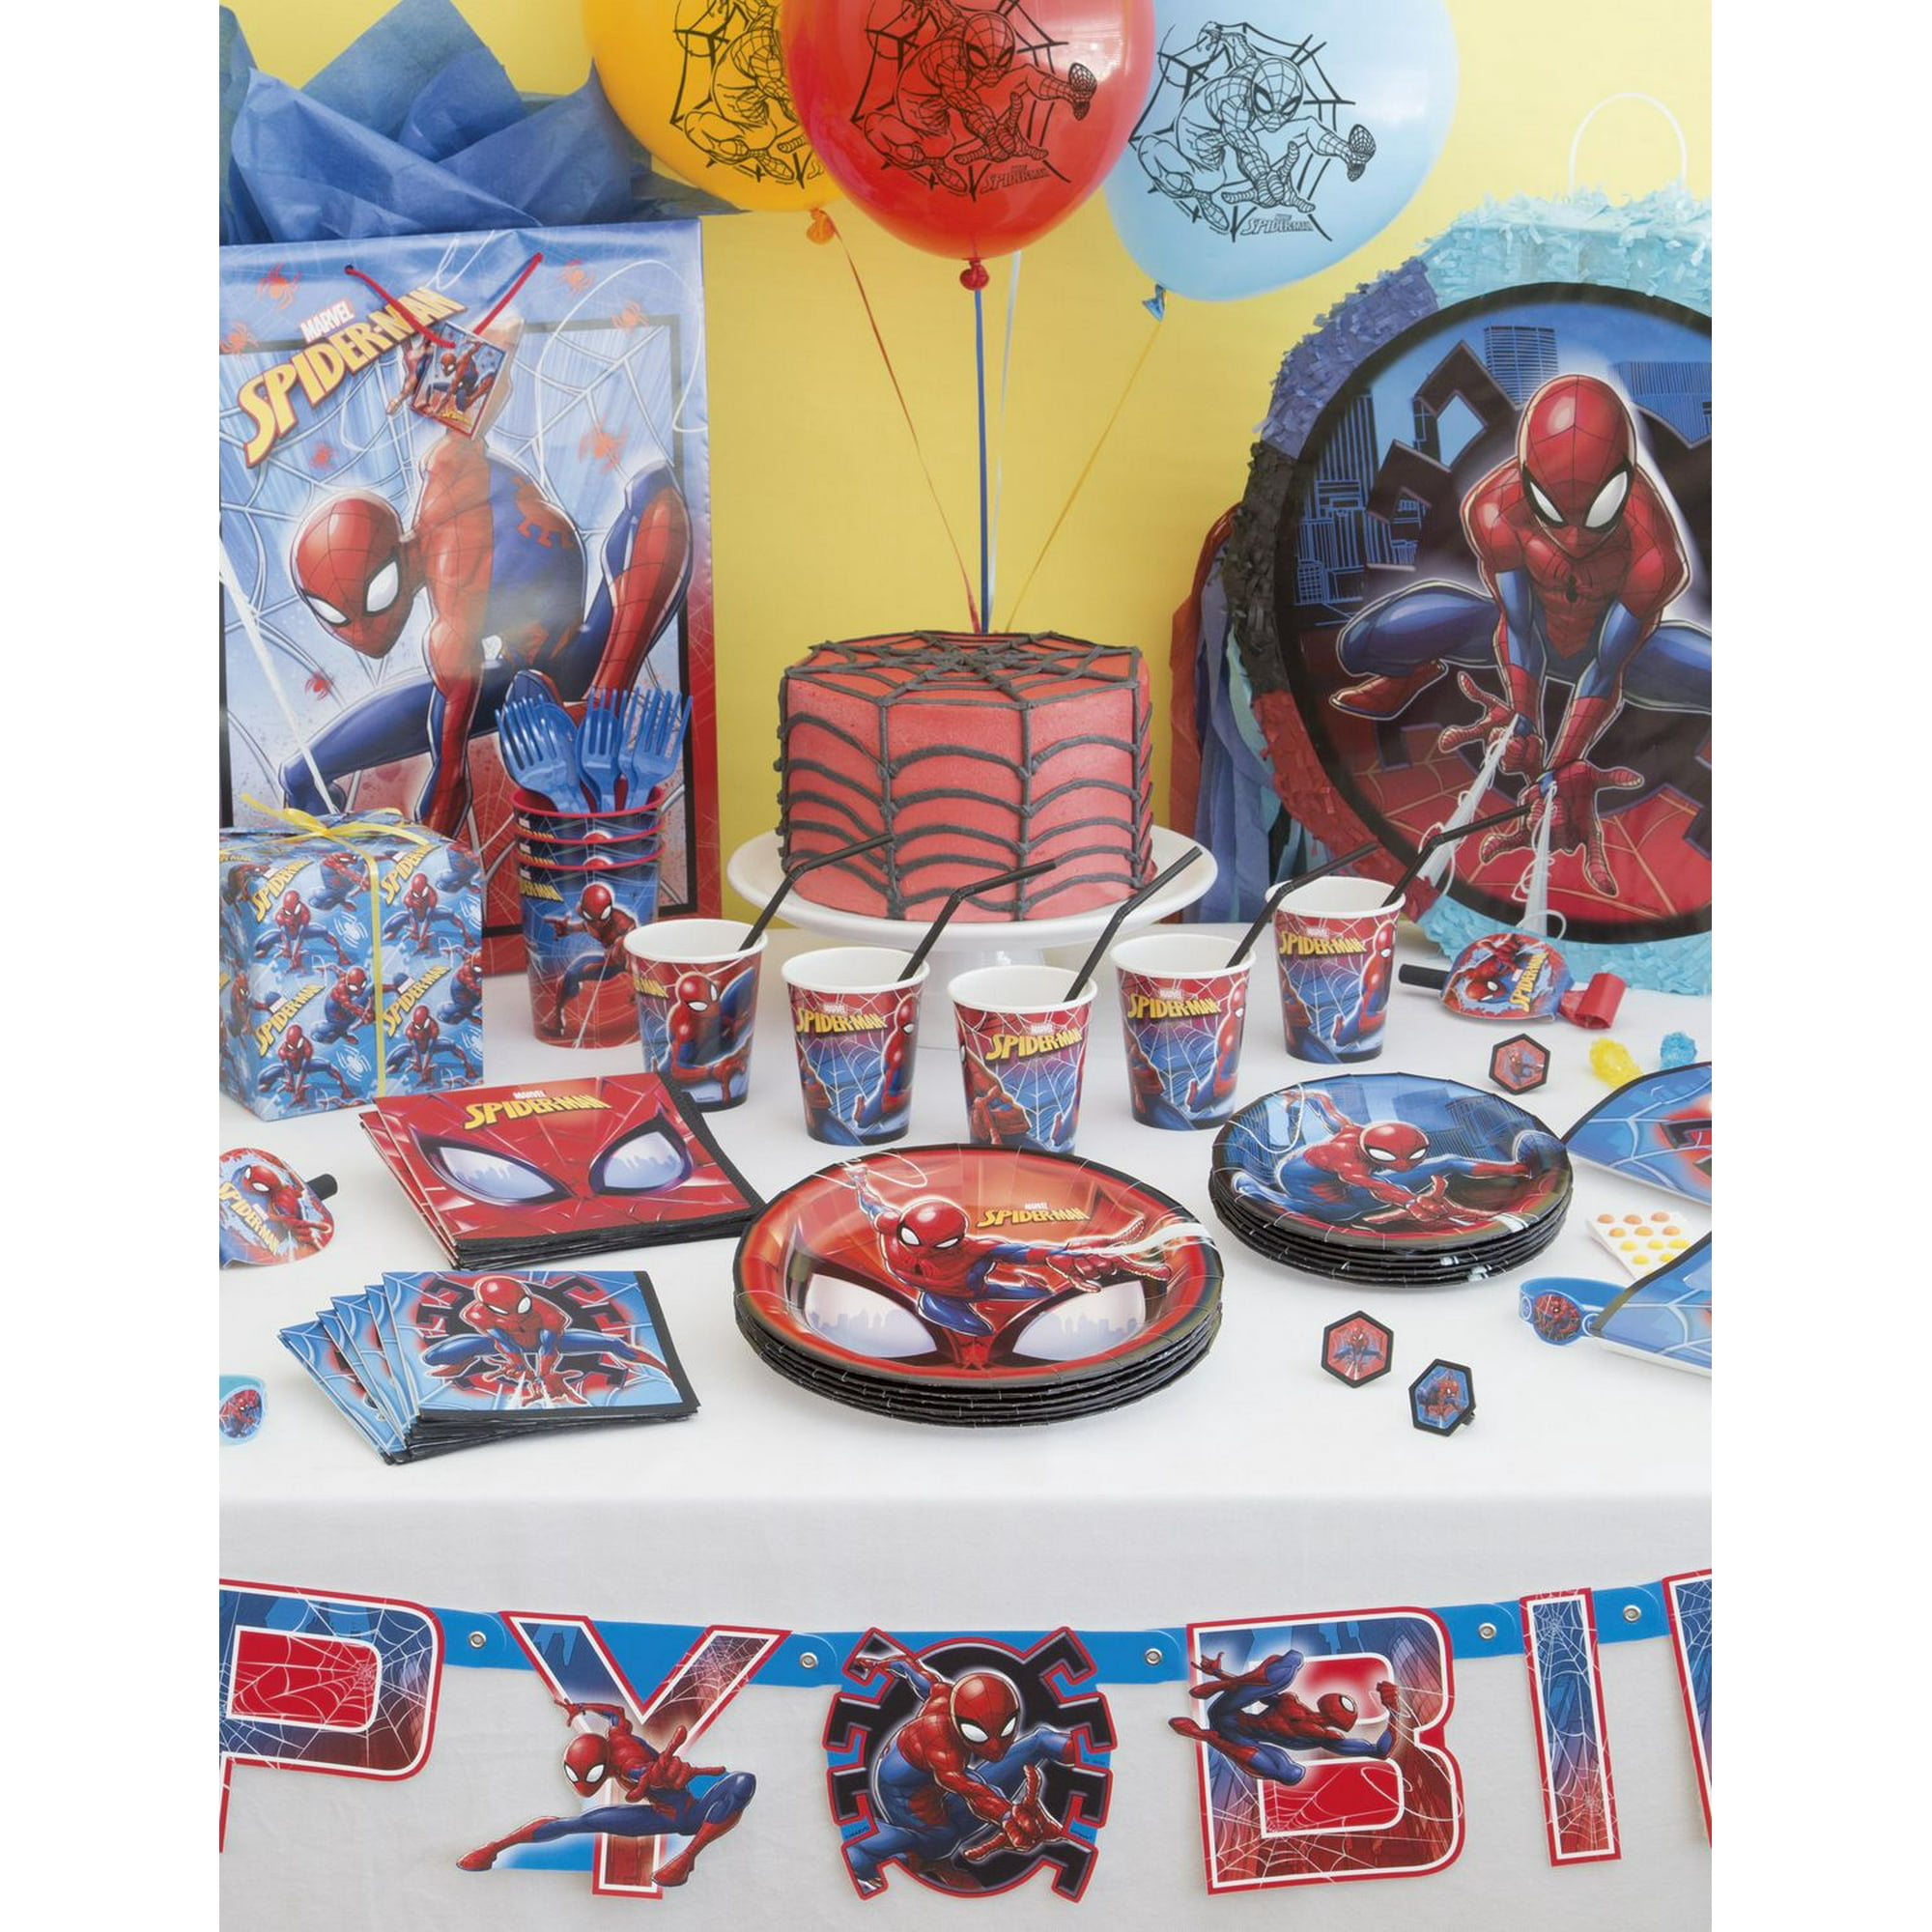 Spider-Man Pull Piñata Kit